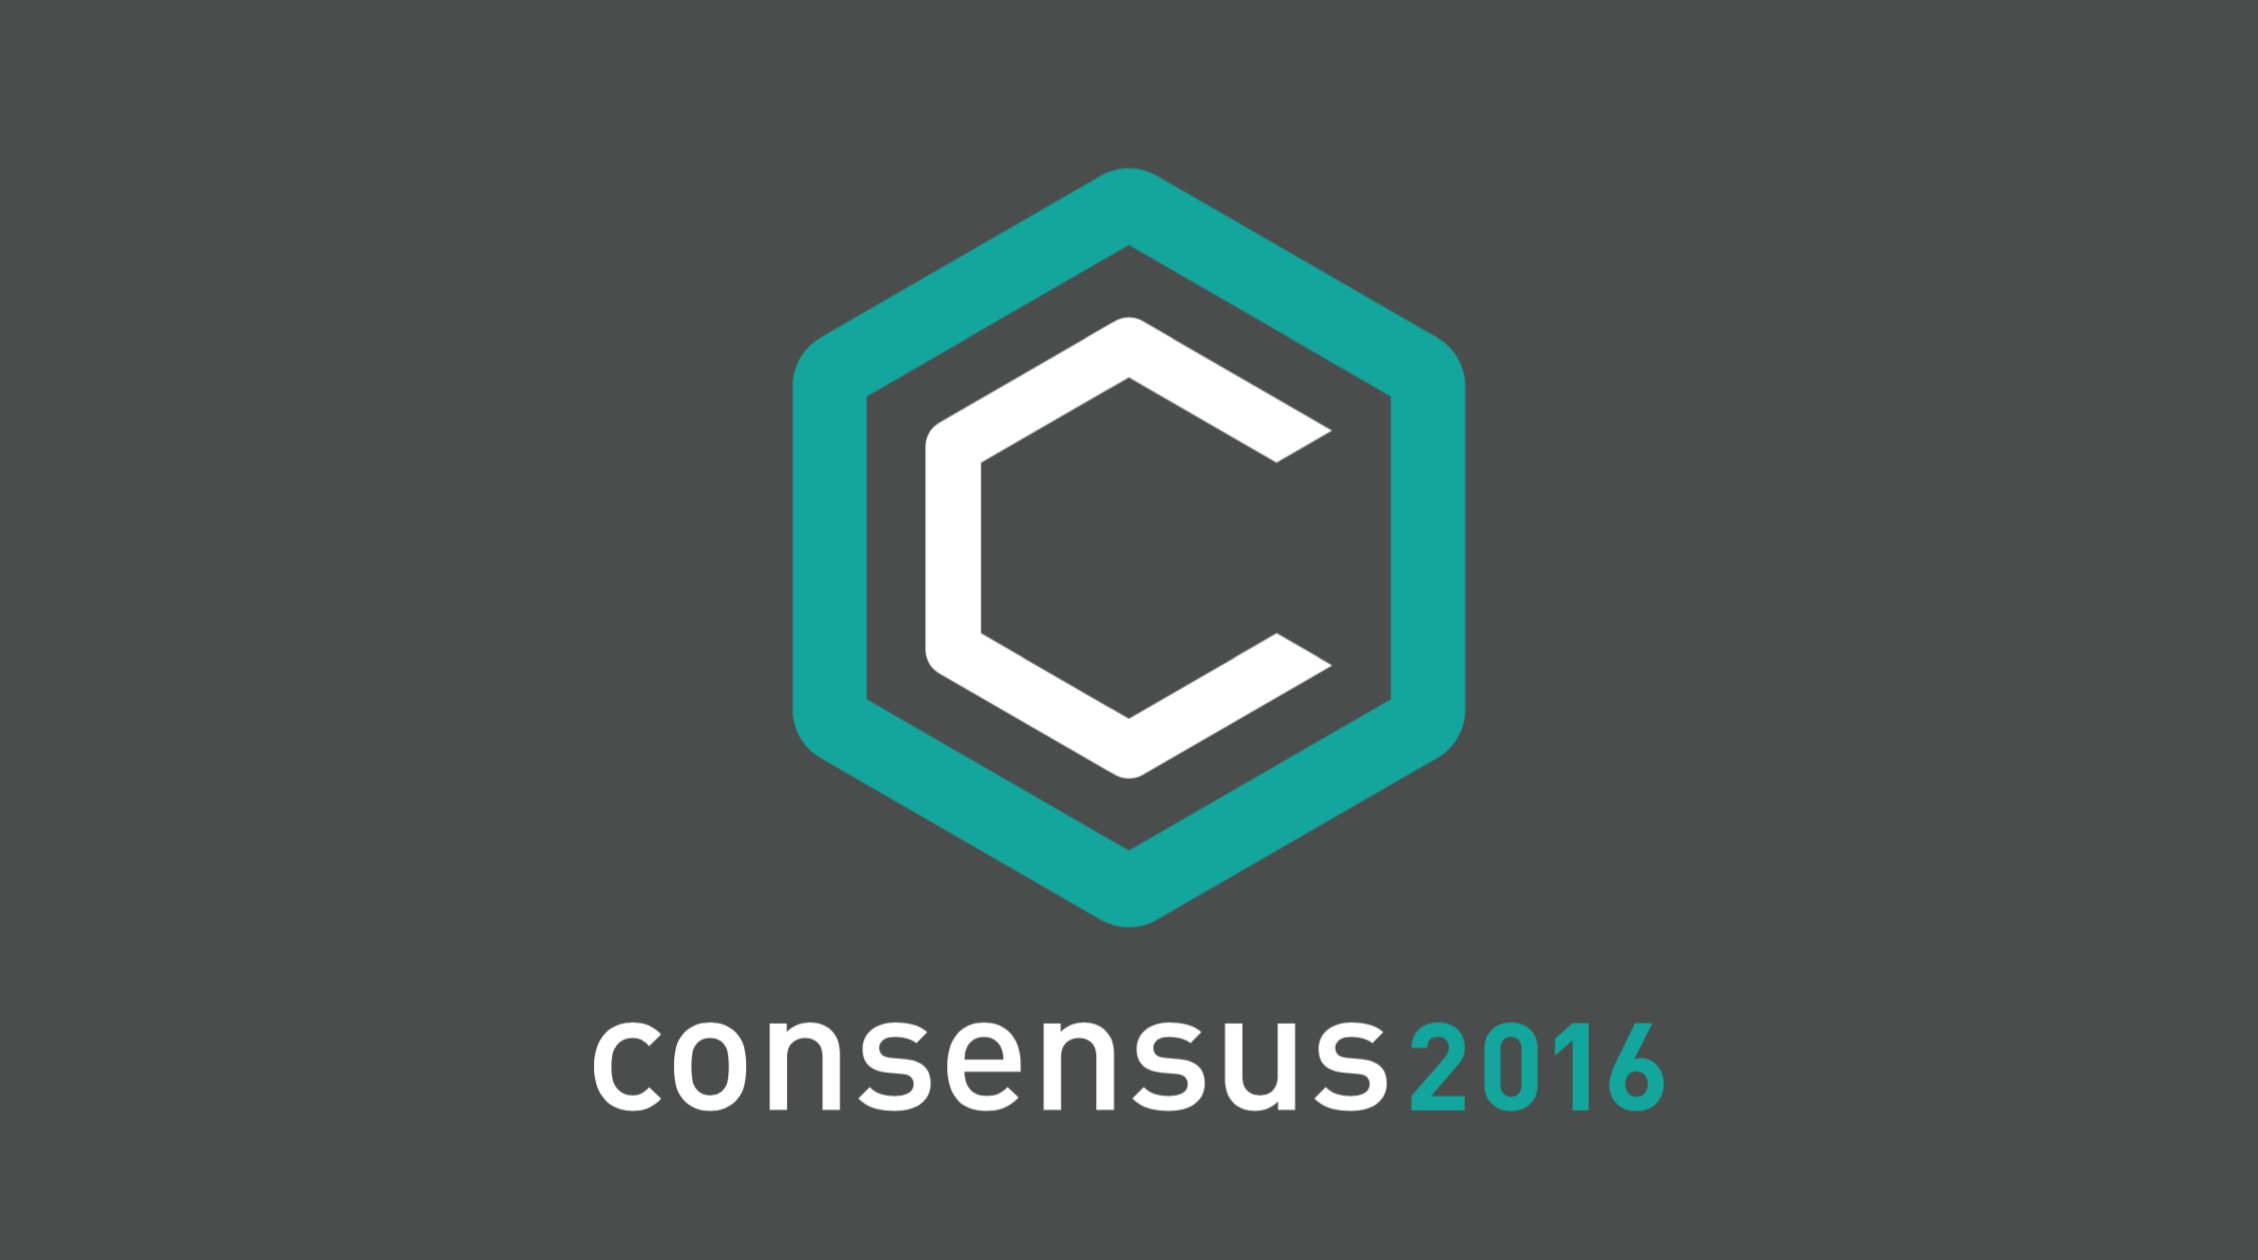 Consensus 2016 Blockchain Logo - CoinDesk Releases Full Agenda for Consensus 2016 Blockchain ...